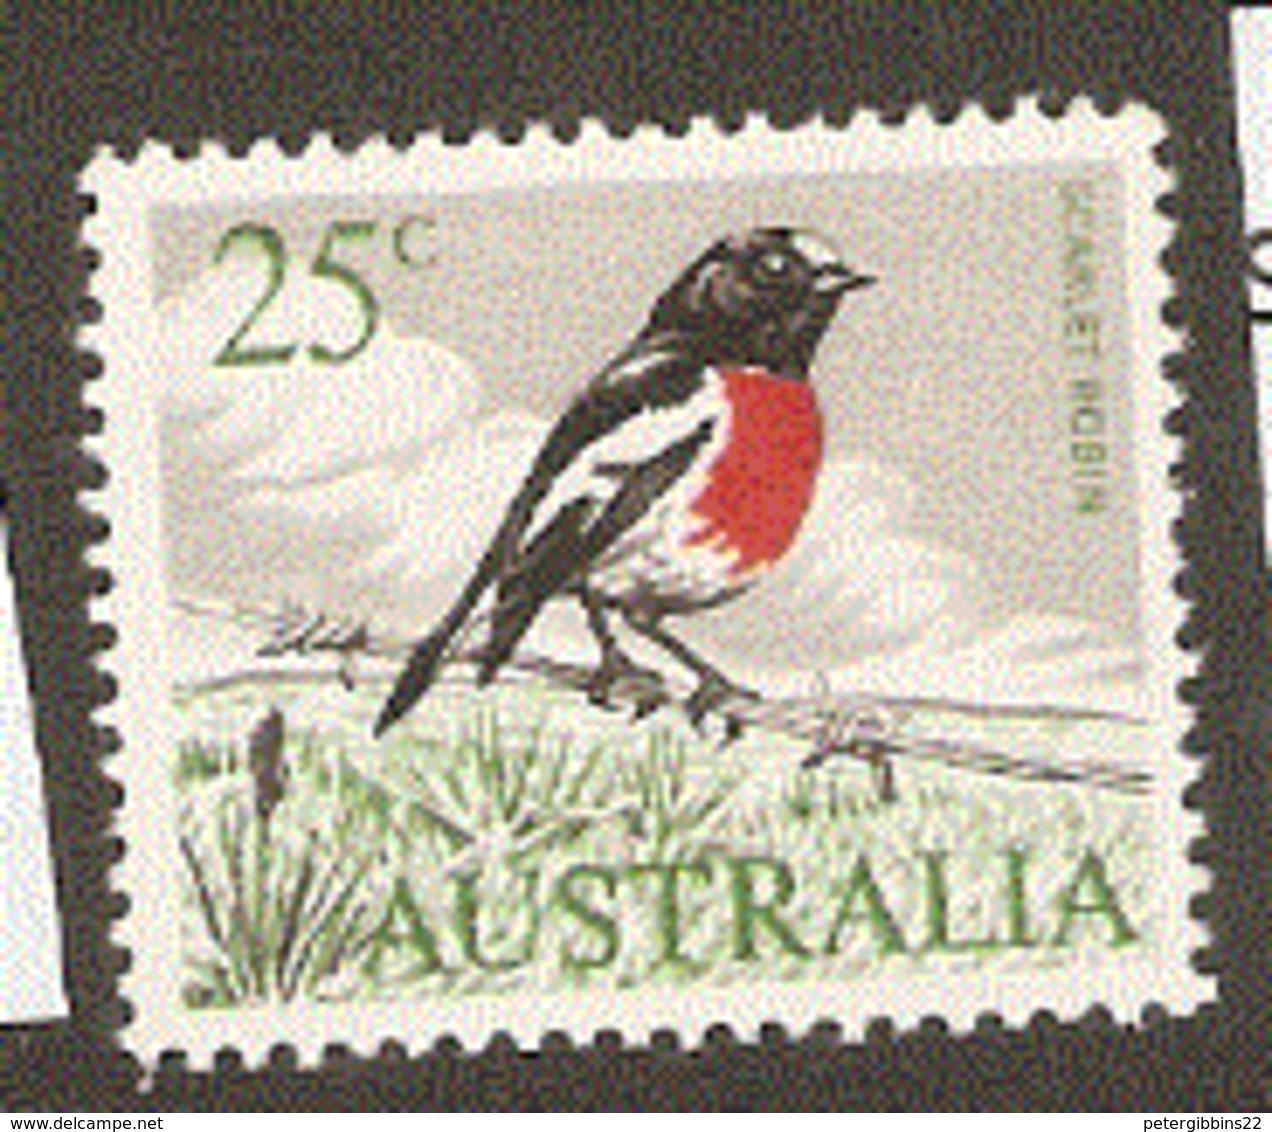 Australia  1966  SG  396  Scarlet Robin  Unmounted Mint - Ongebruikt